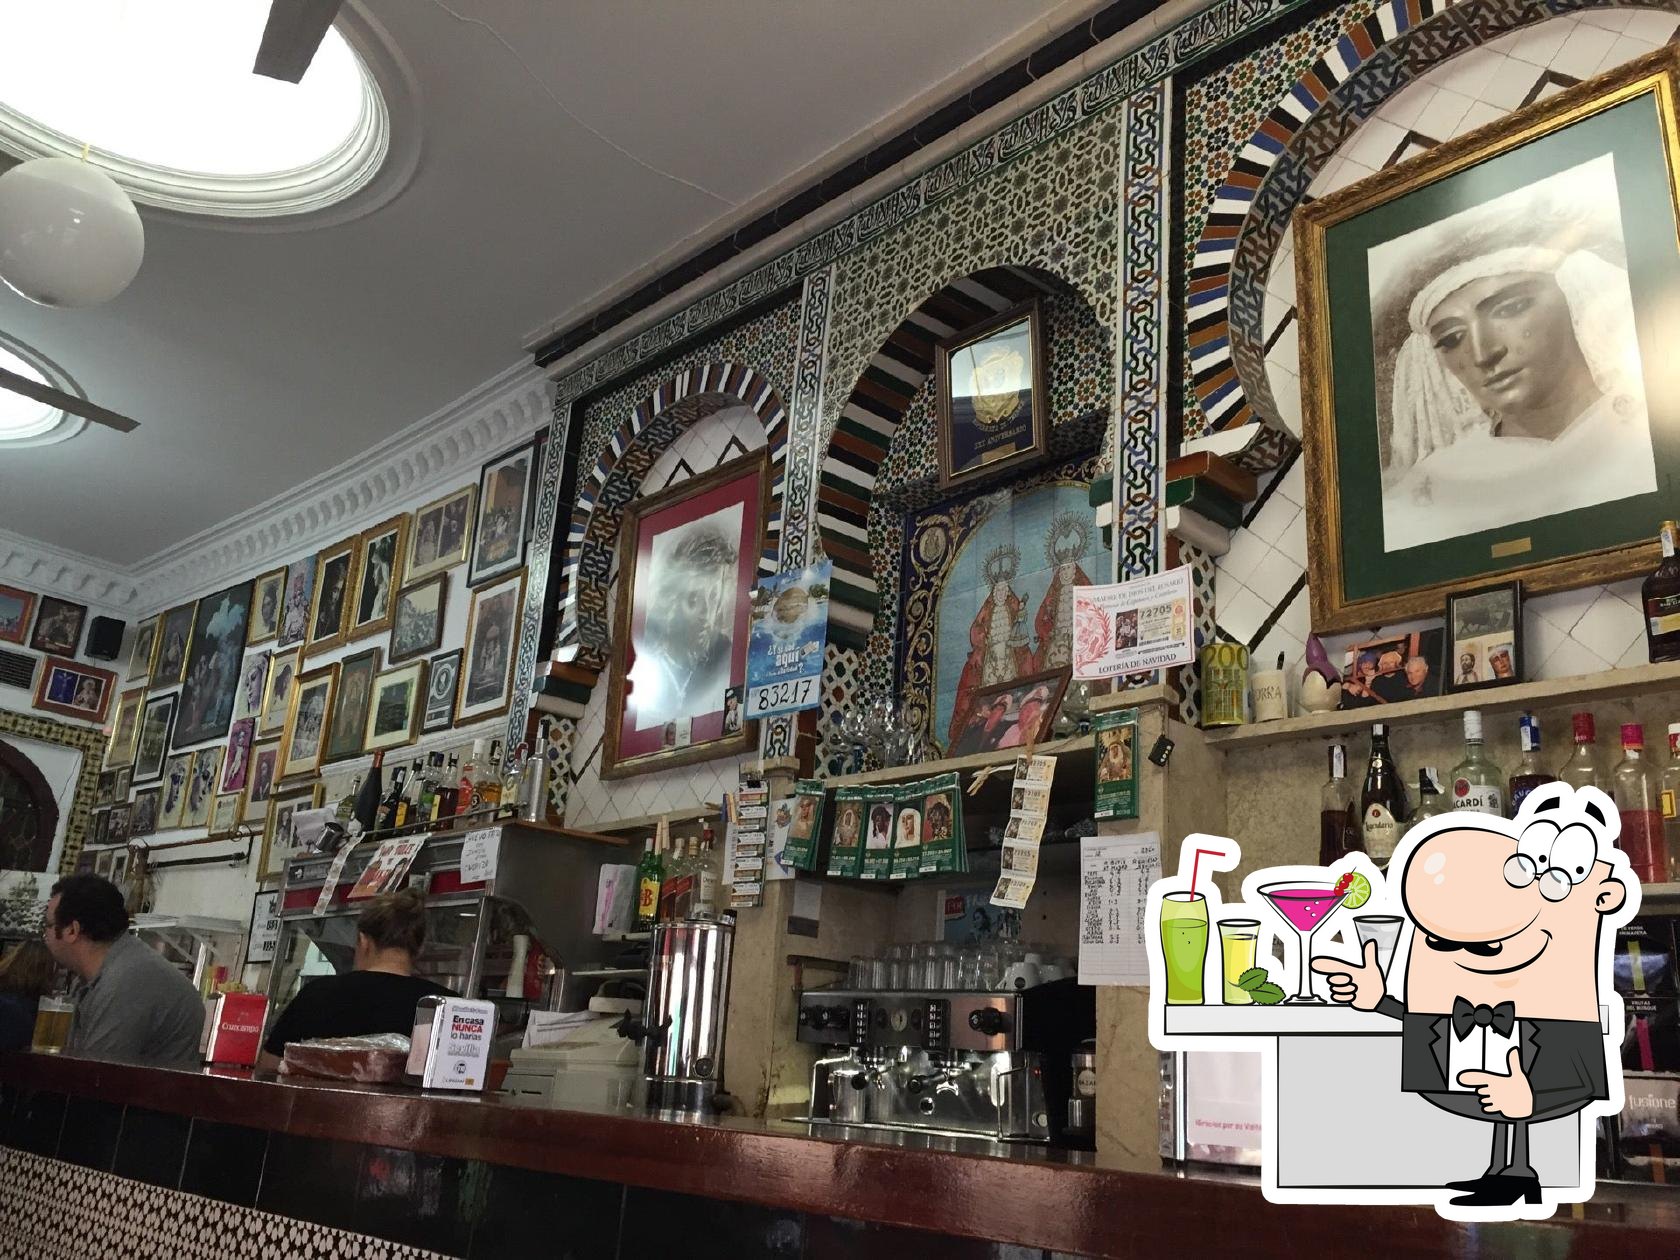 Bar Santa Ana, C. Pureza, 82 in Seville - Restaurant reviews